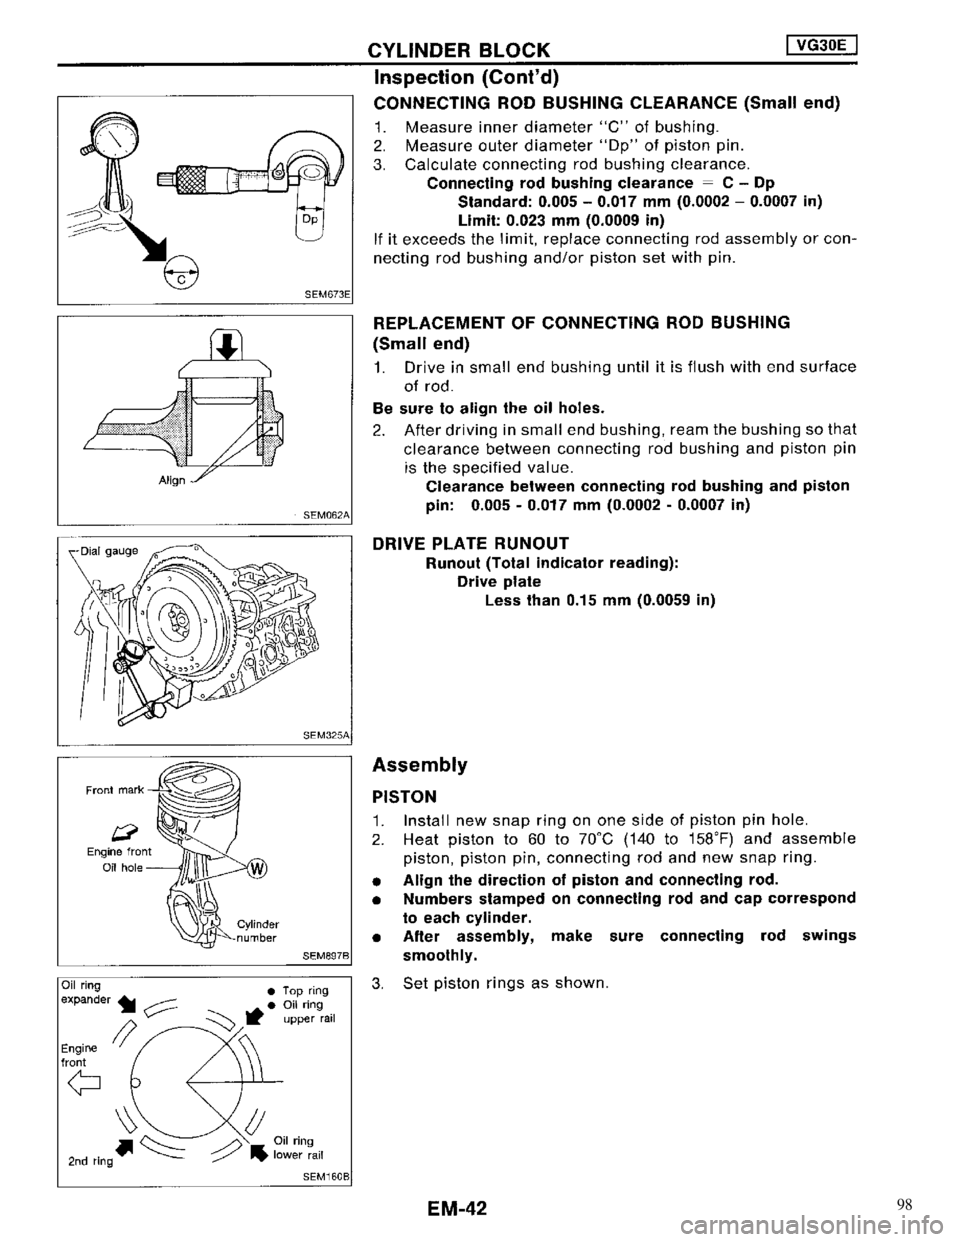 NISSAN MAXIMA 1994 A32 / 4.G Engine Mechanical Service Manual 98 